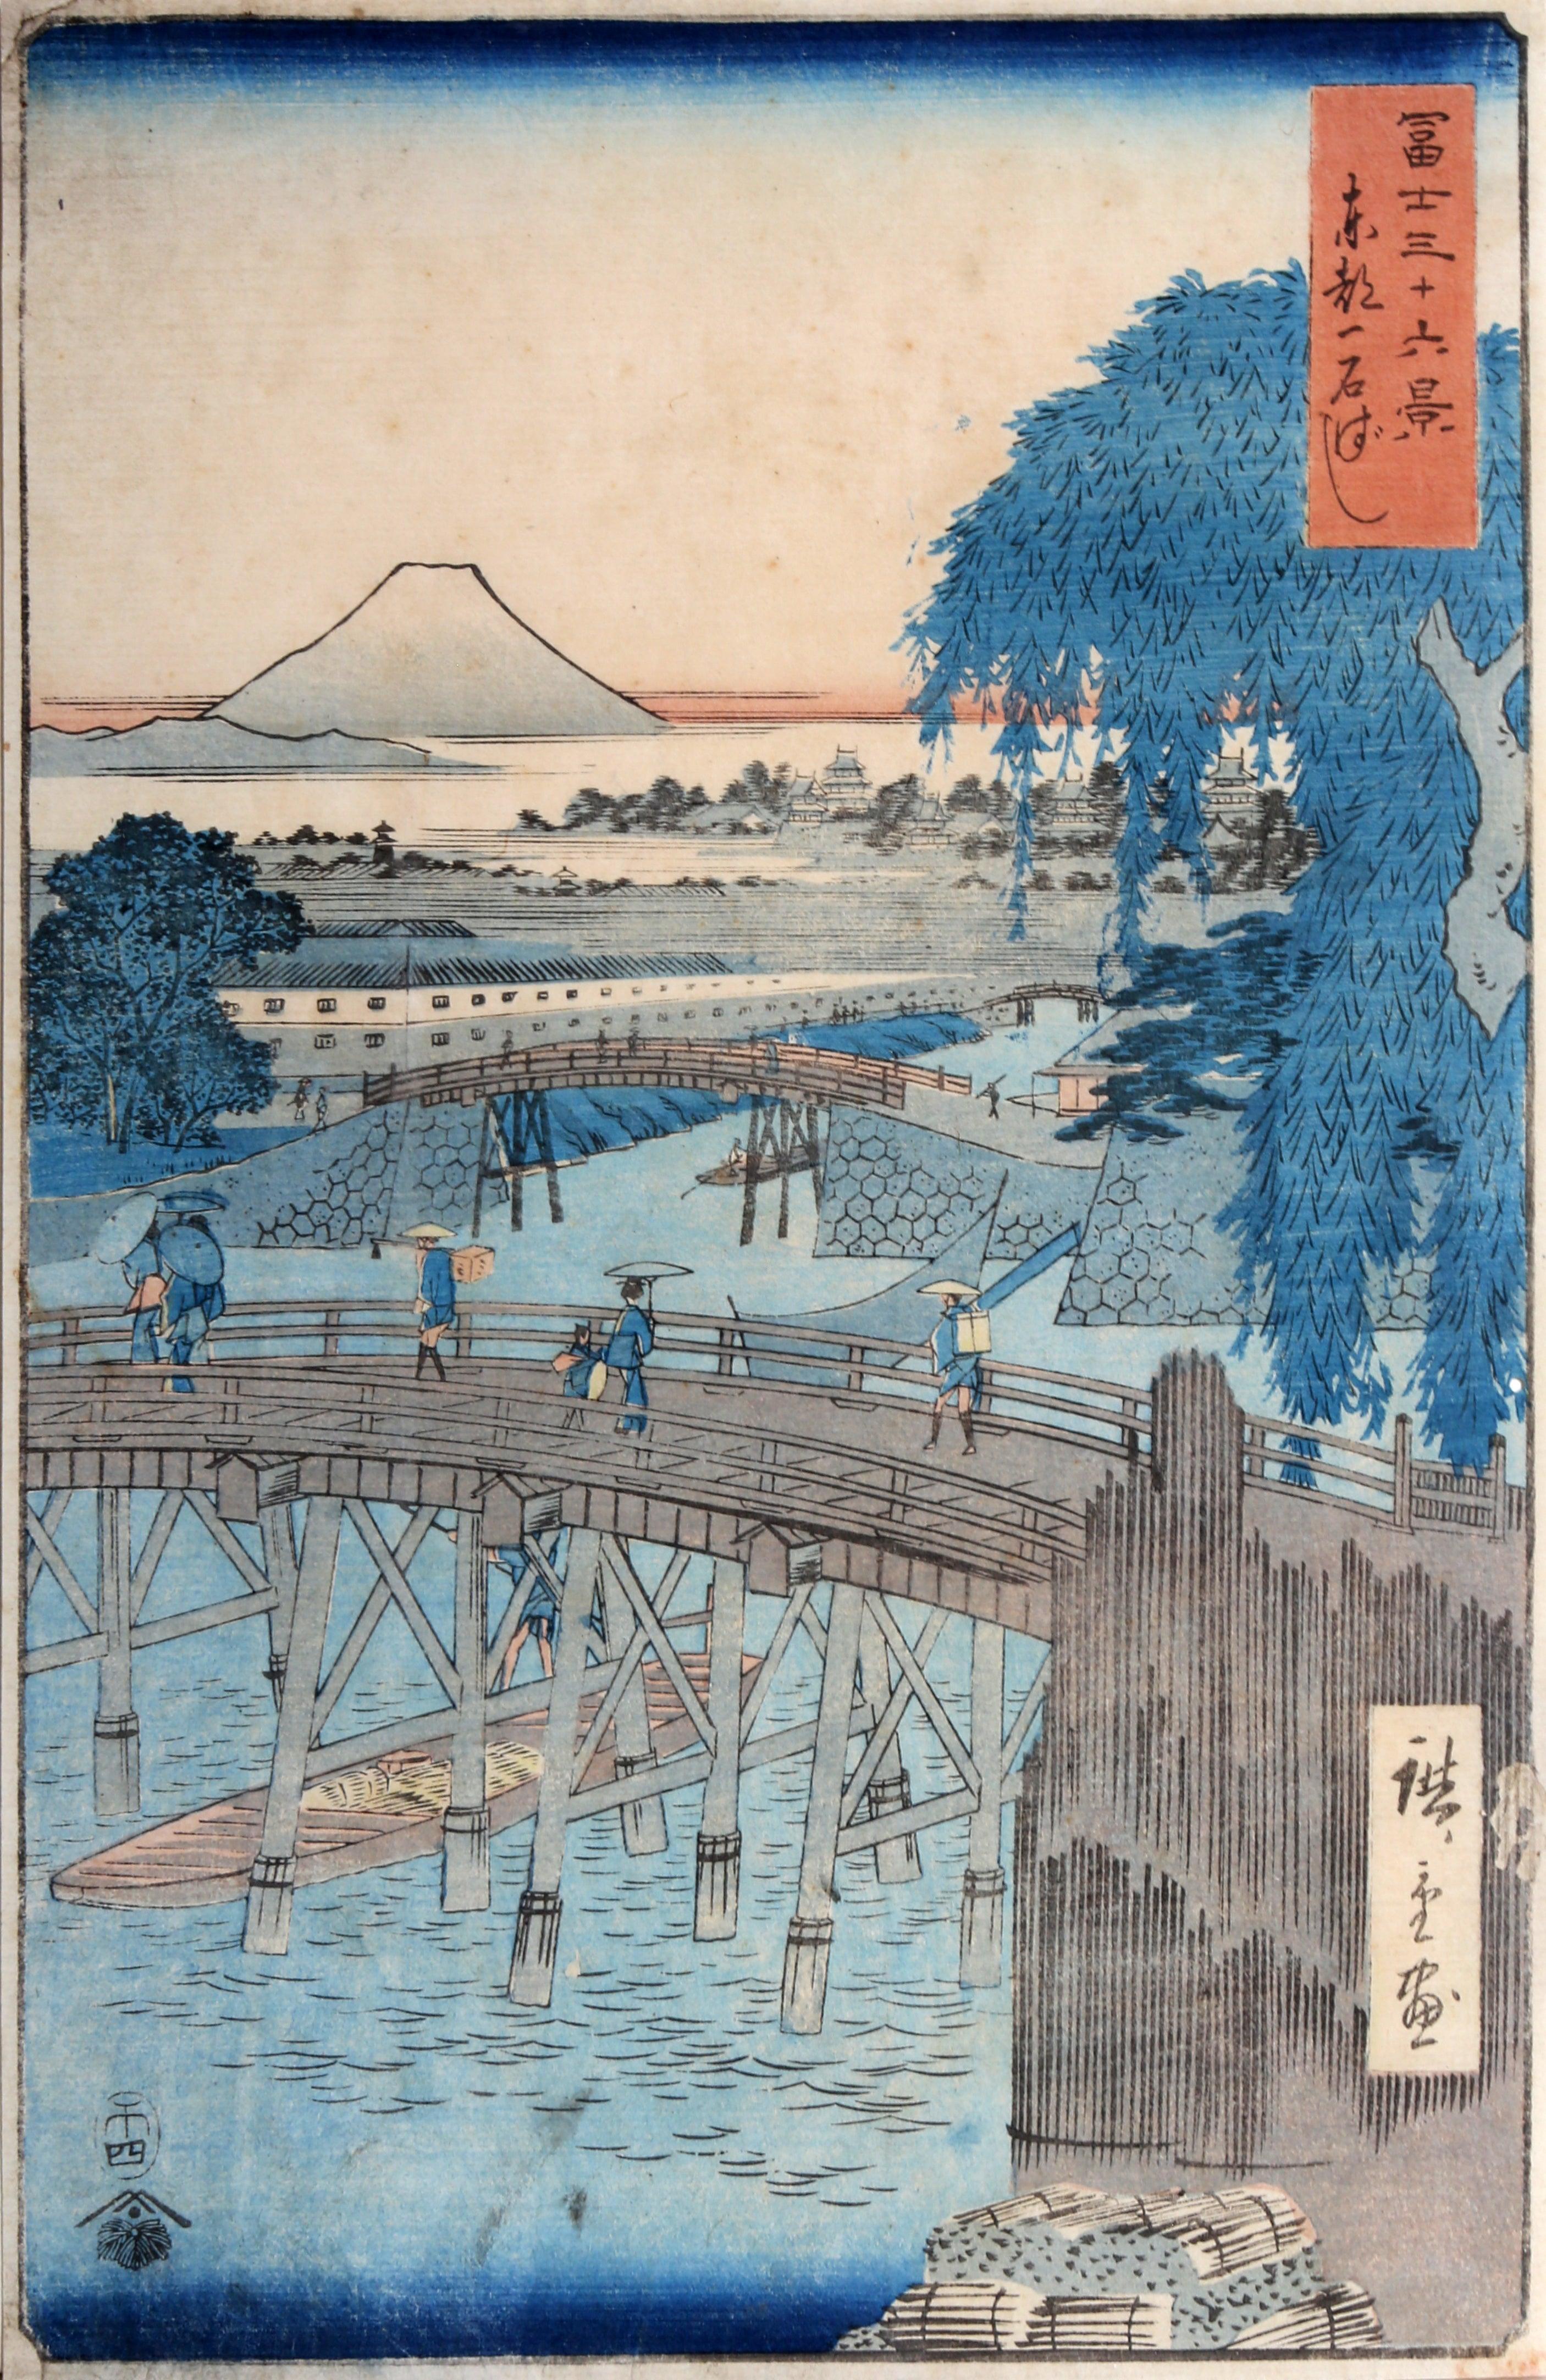 Ichikoku Bridge in the Eastern Capital